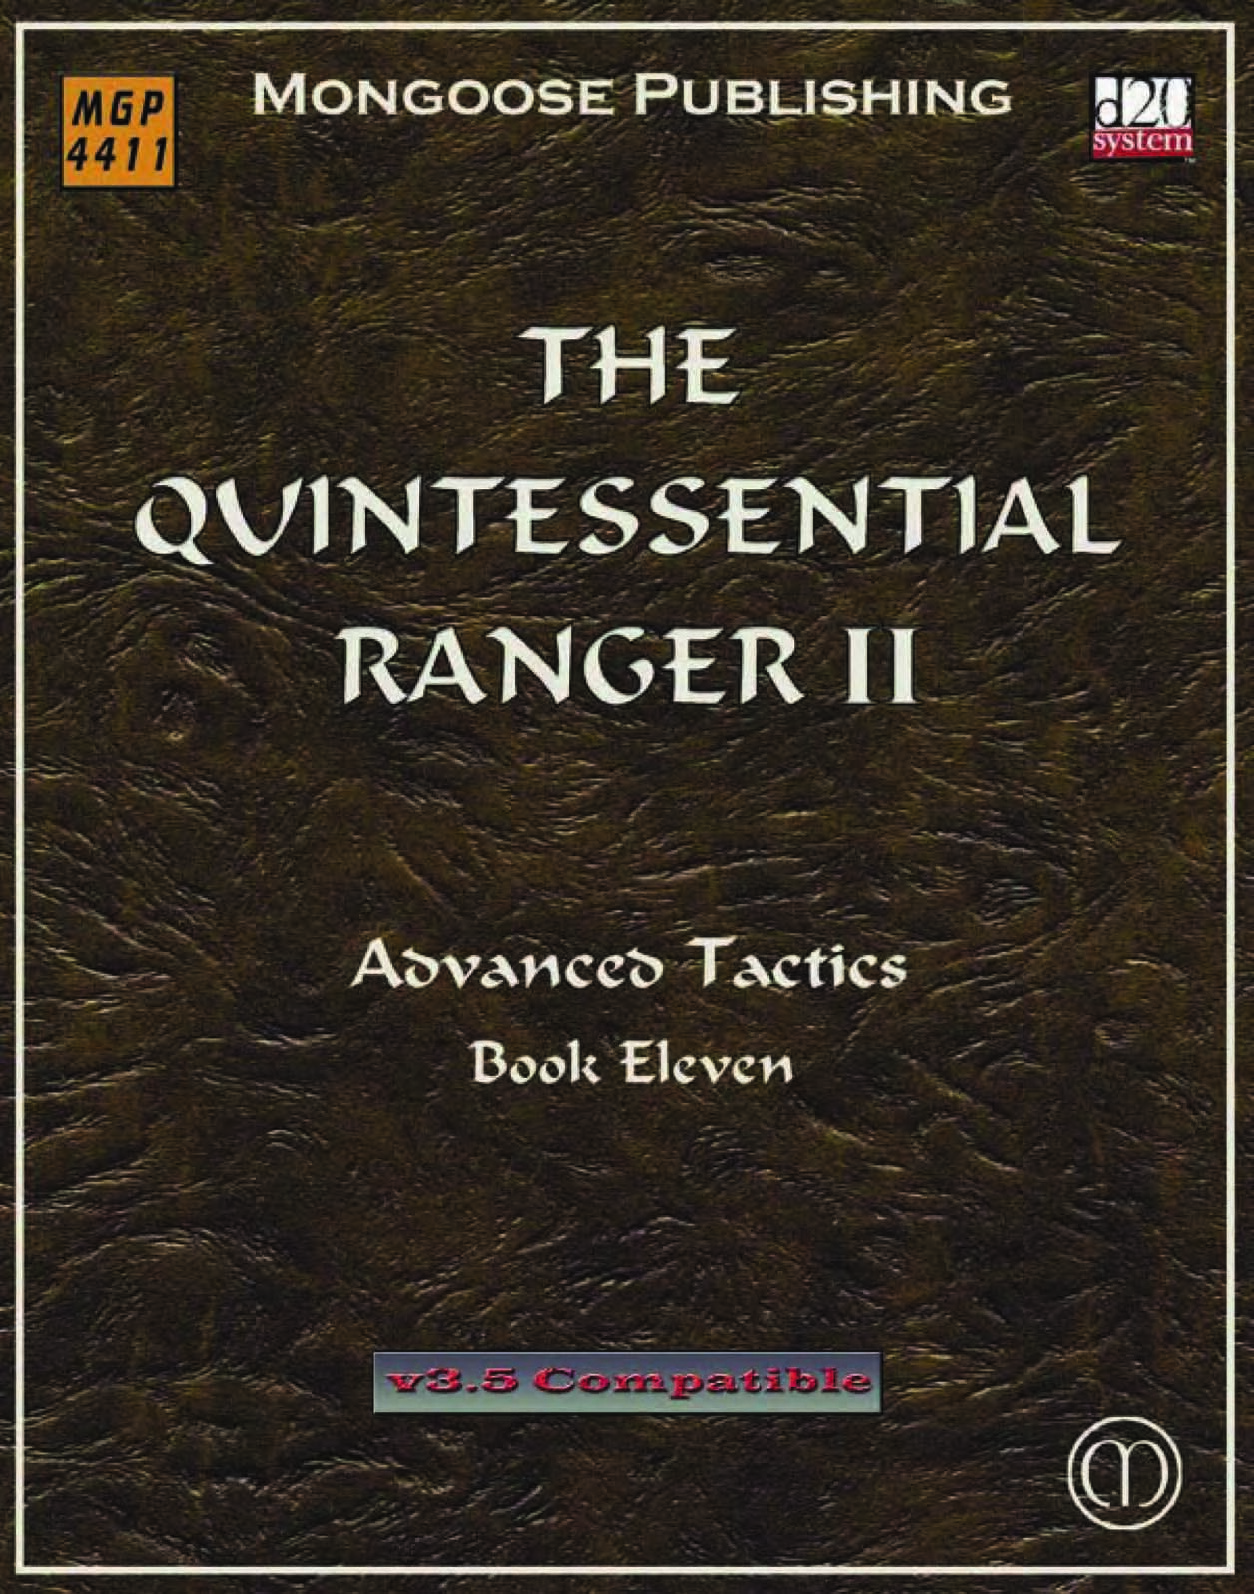 The Quintessential Ranger II